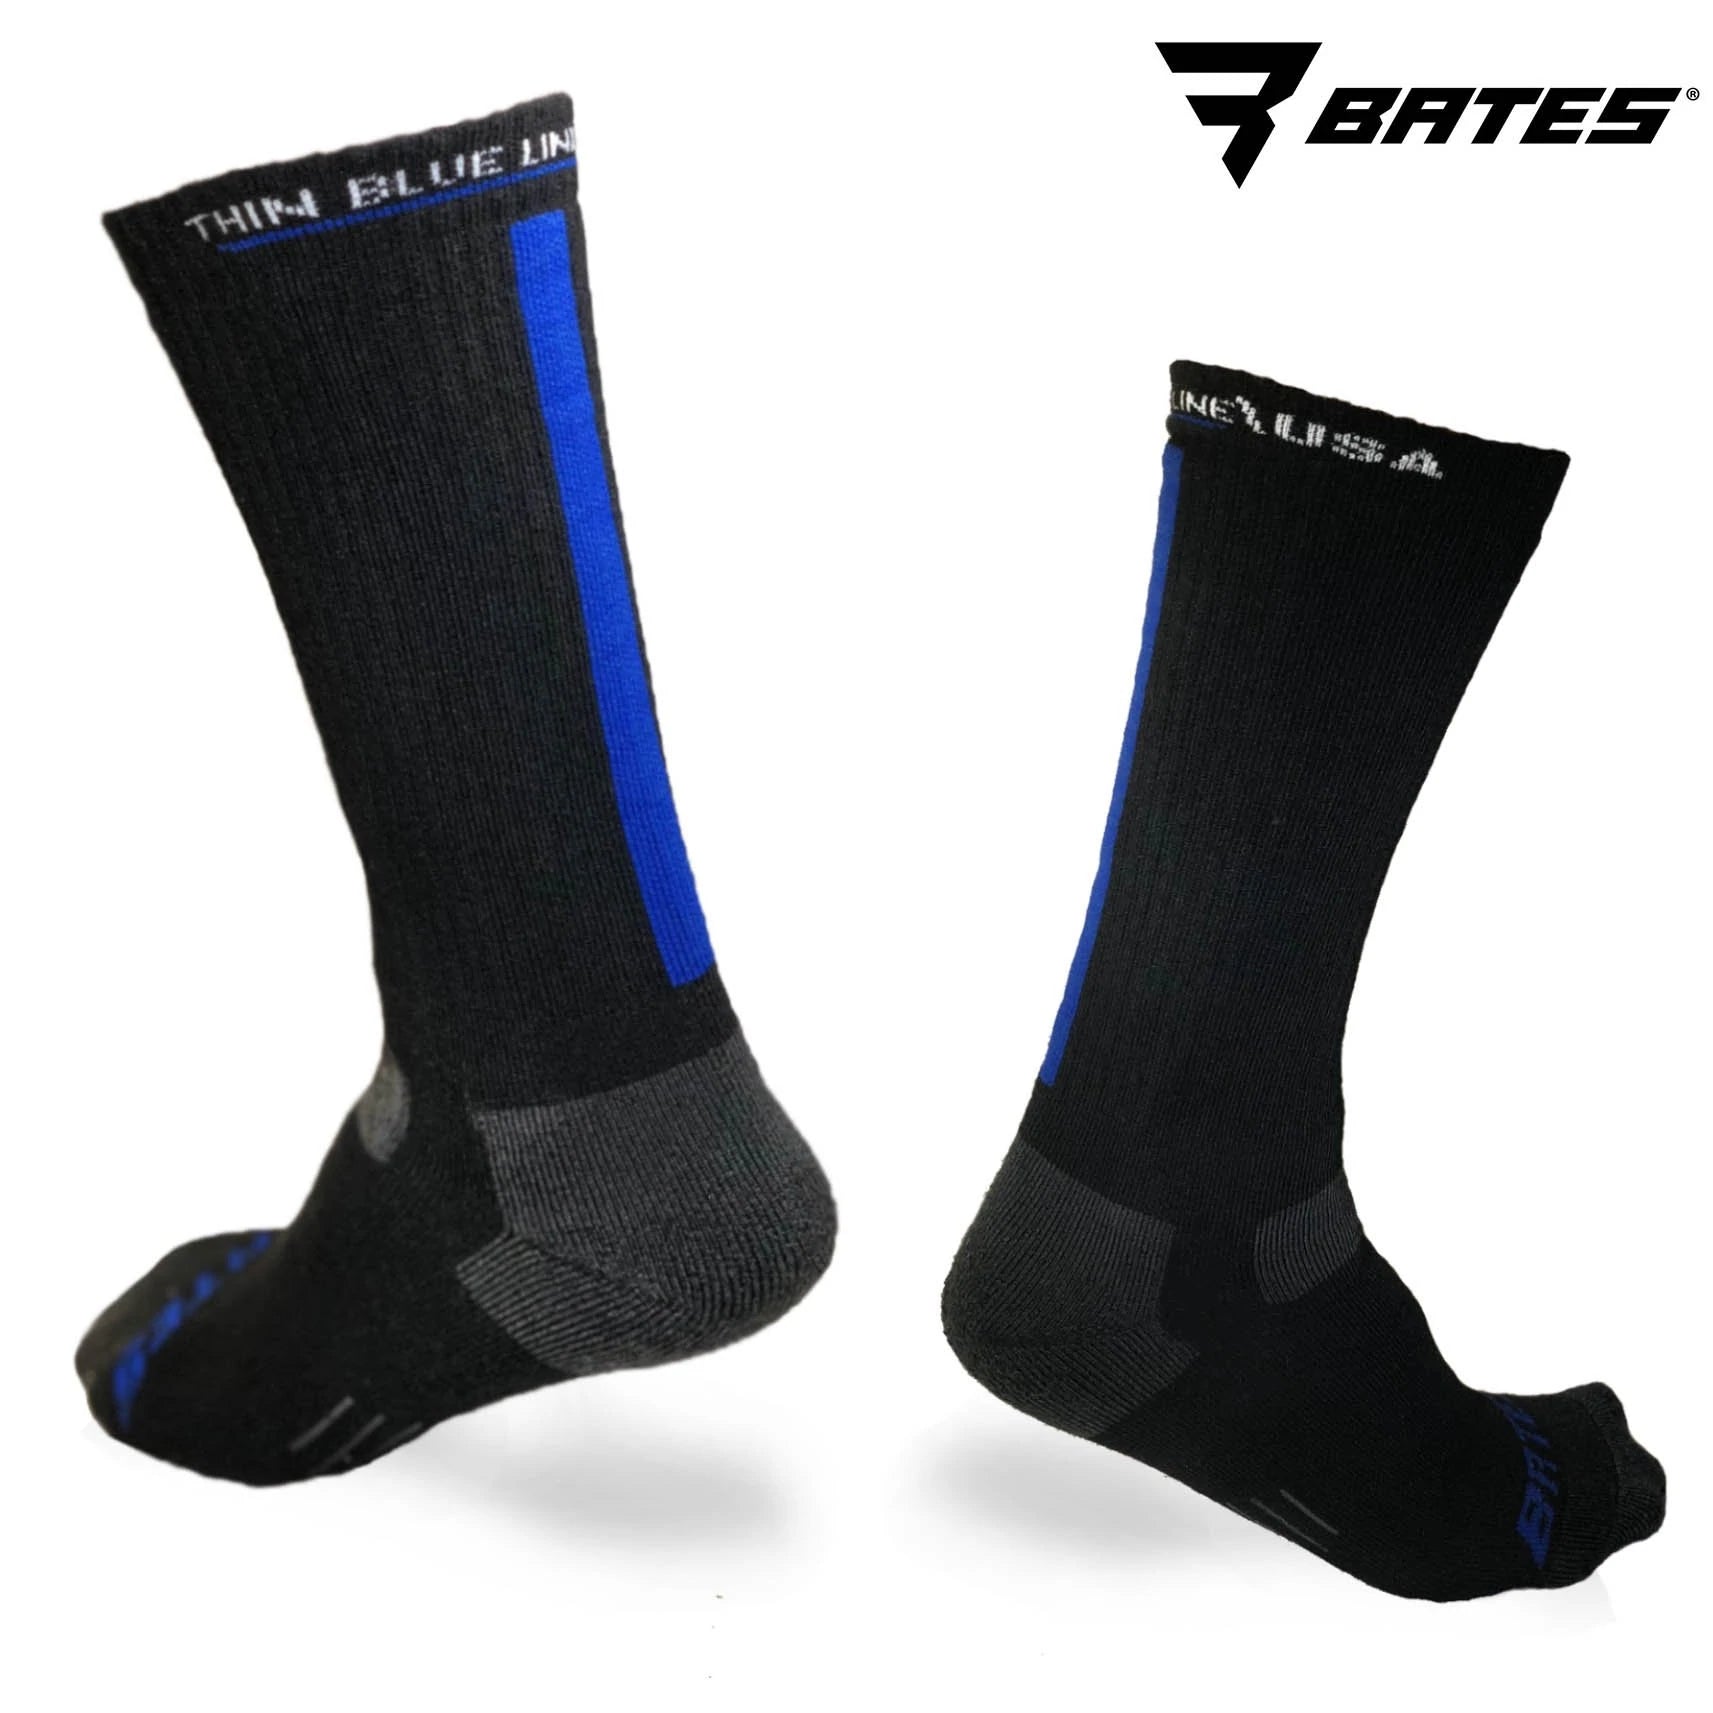 Bates + Thin Blue Line USA Collaboration, Special Edition Socks